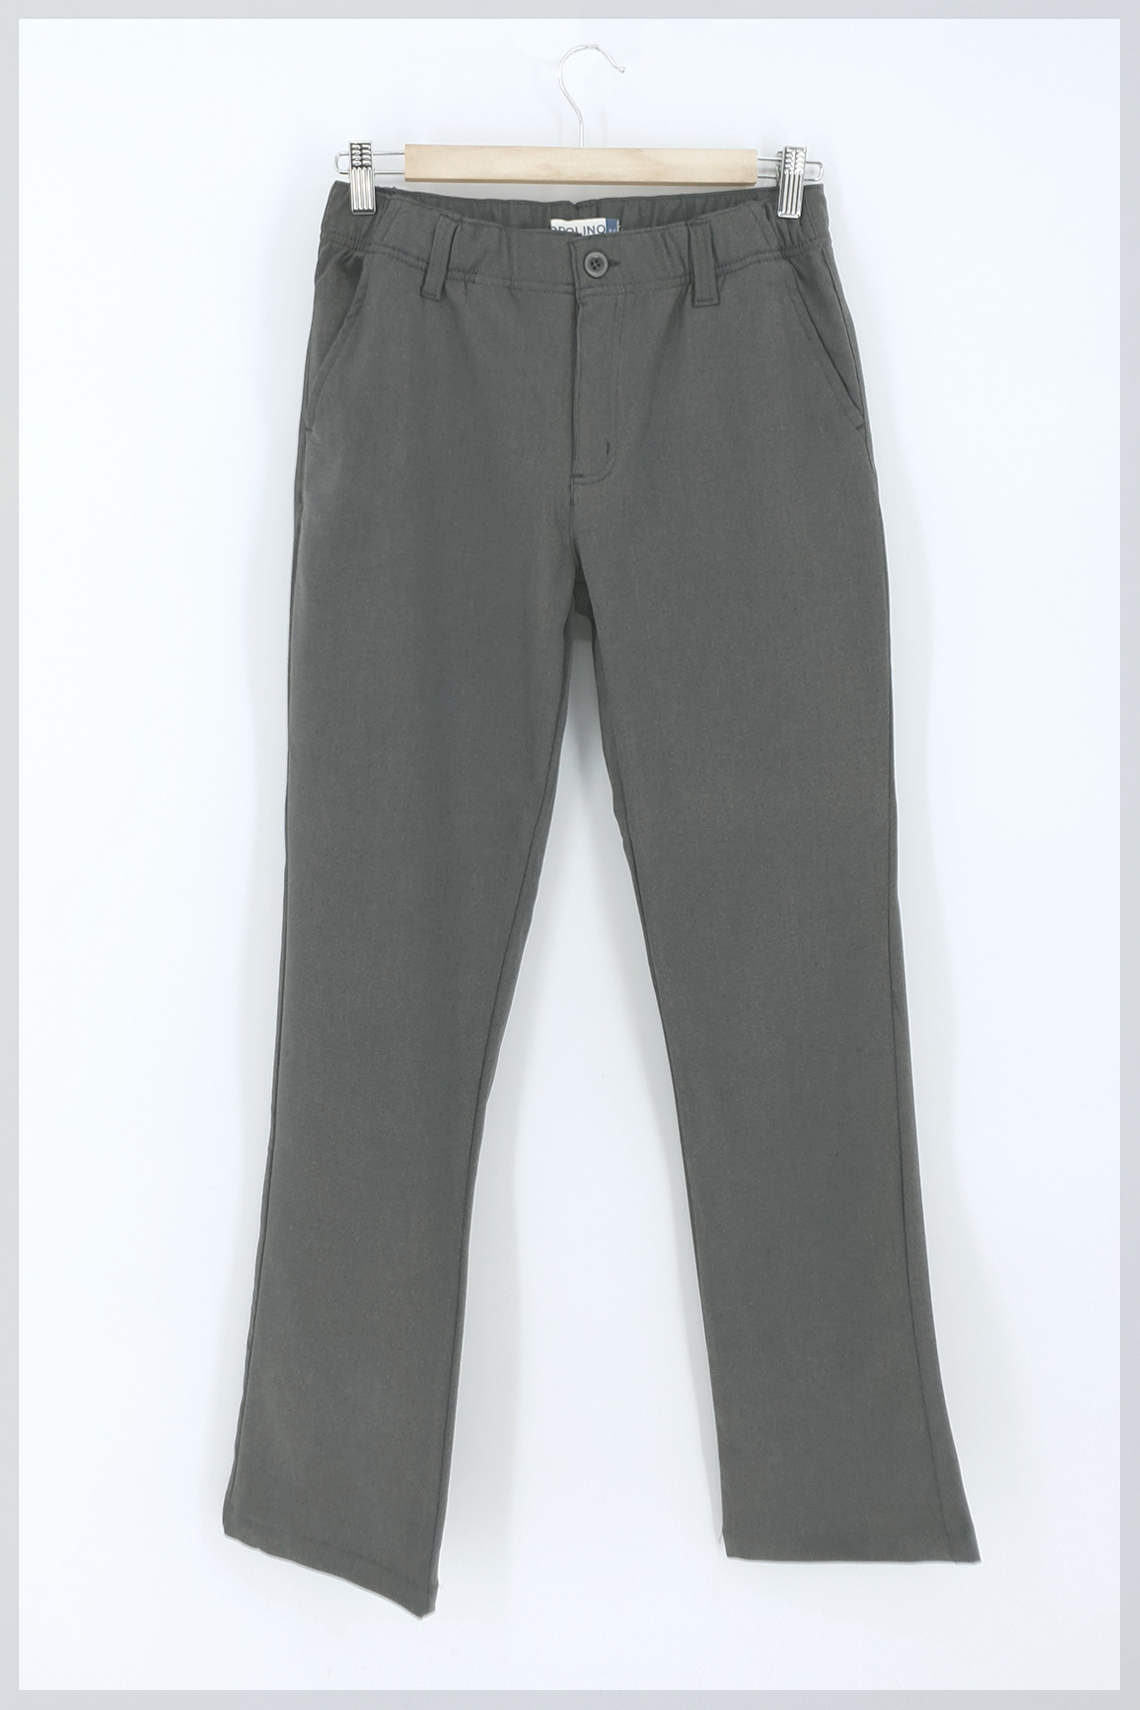 Pantalon Vestir Hombre (S - XL)